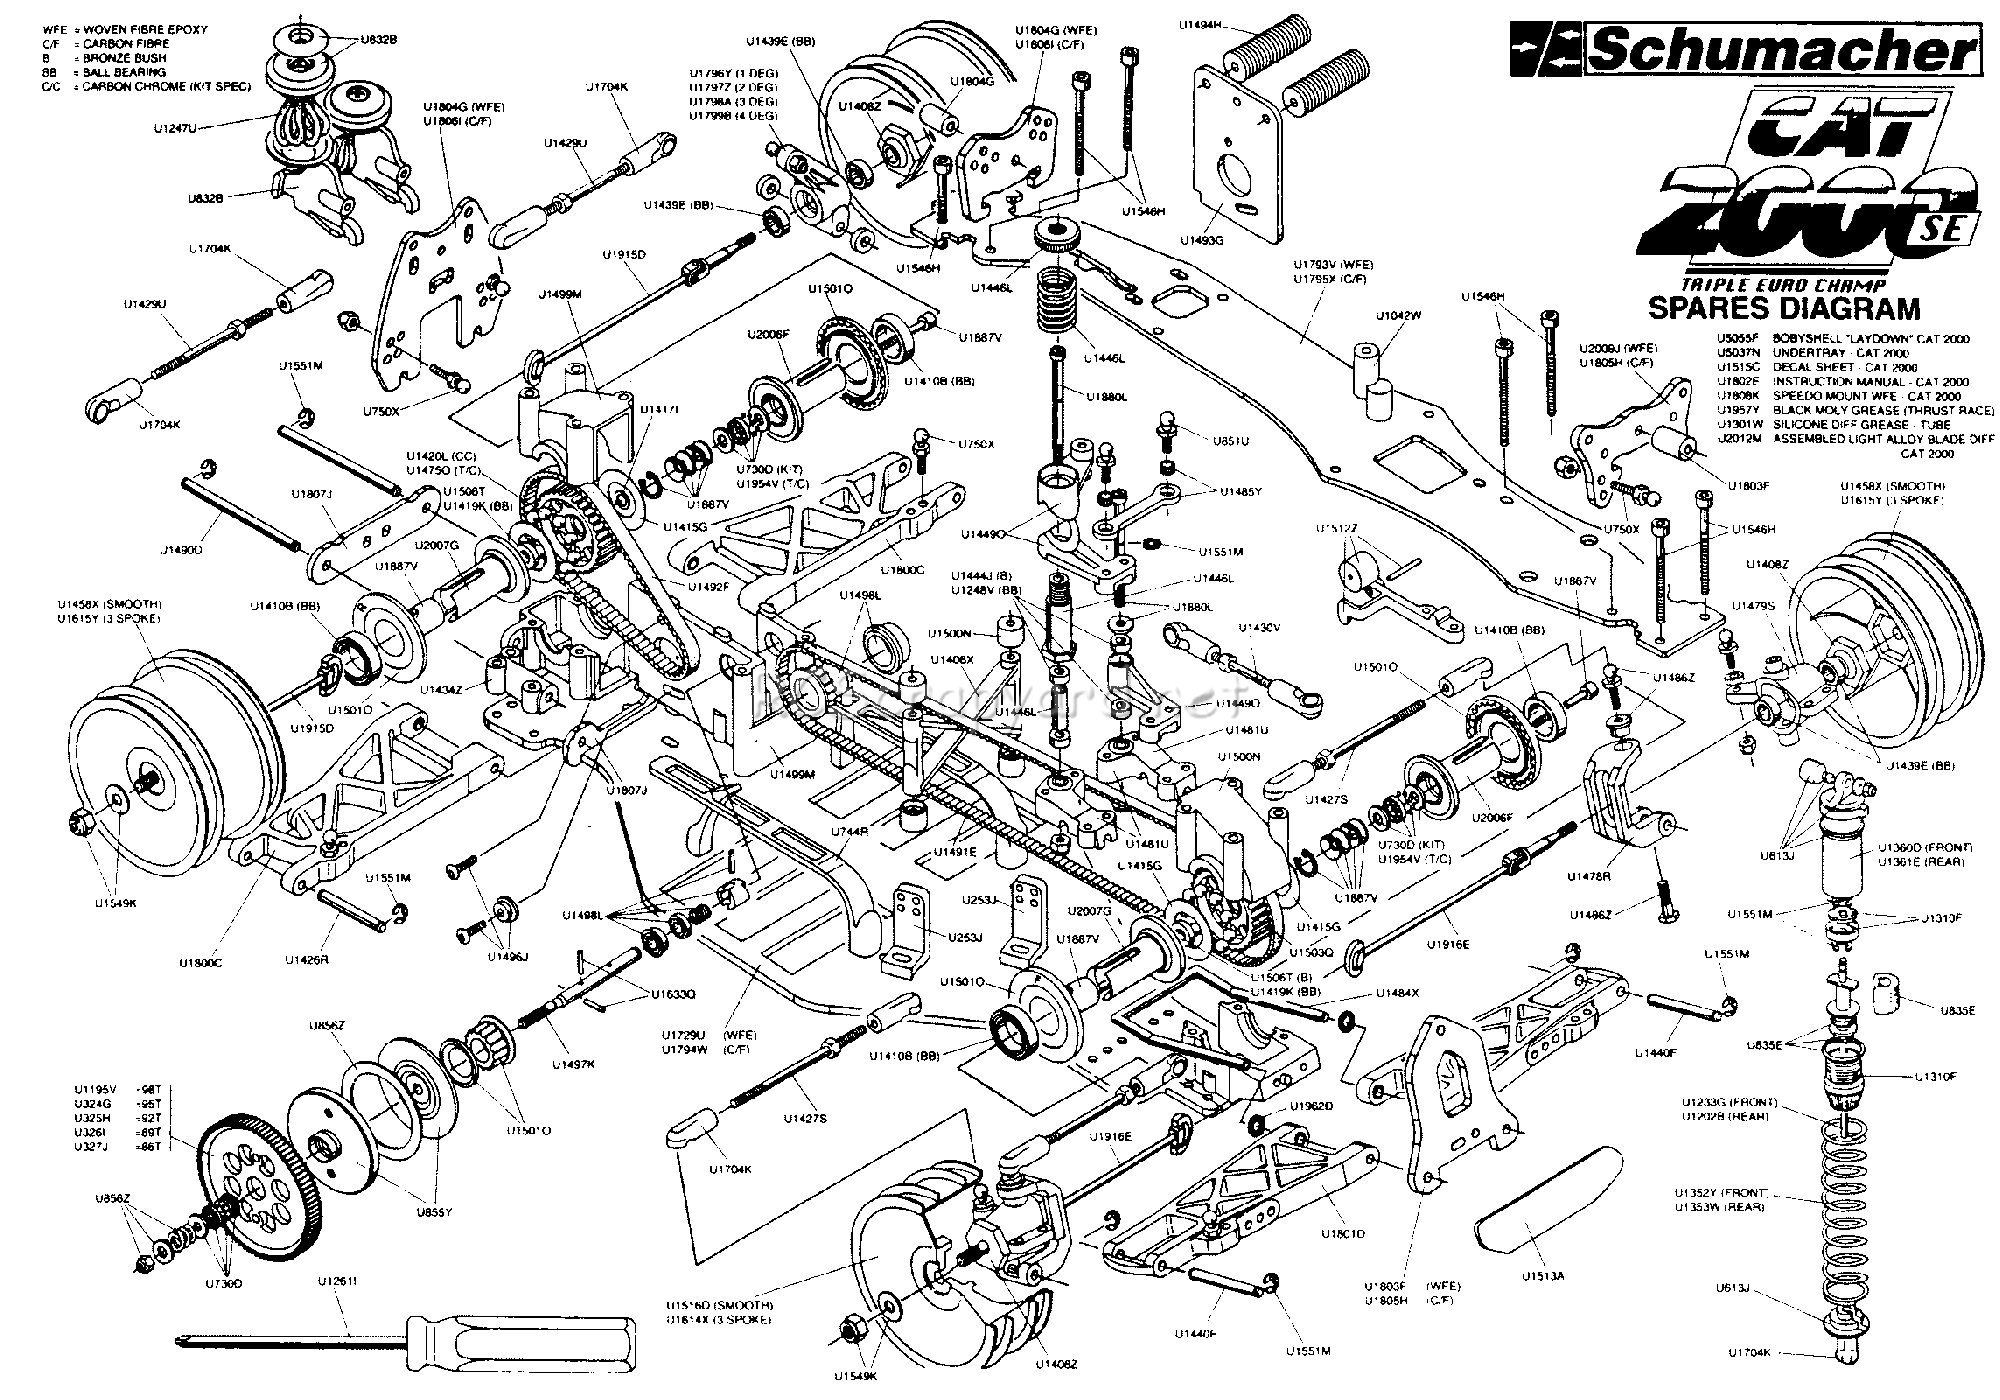 Schumacher - Cat 2000 SE - Exploded View